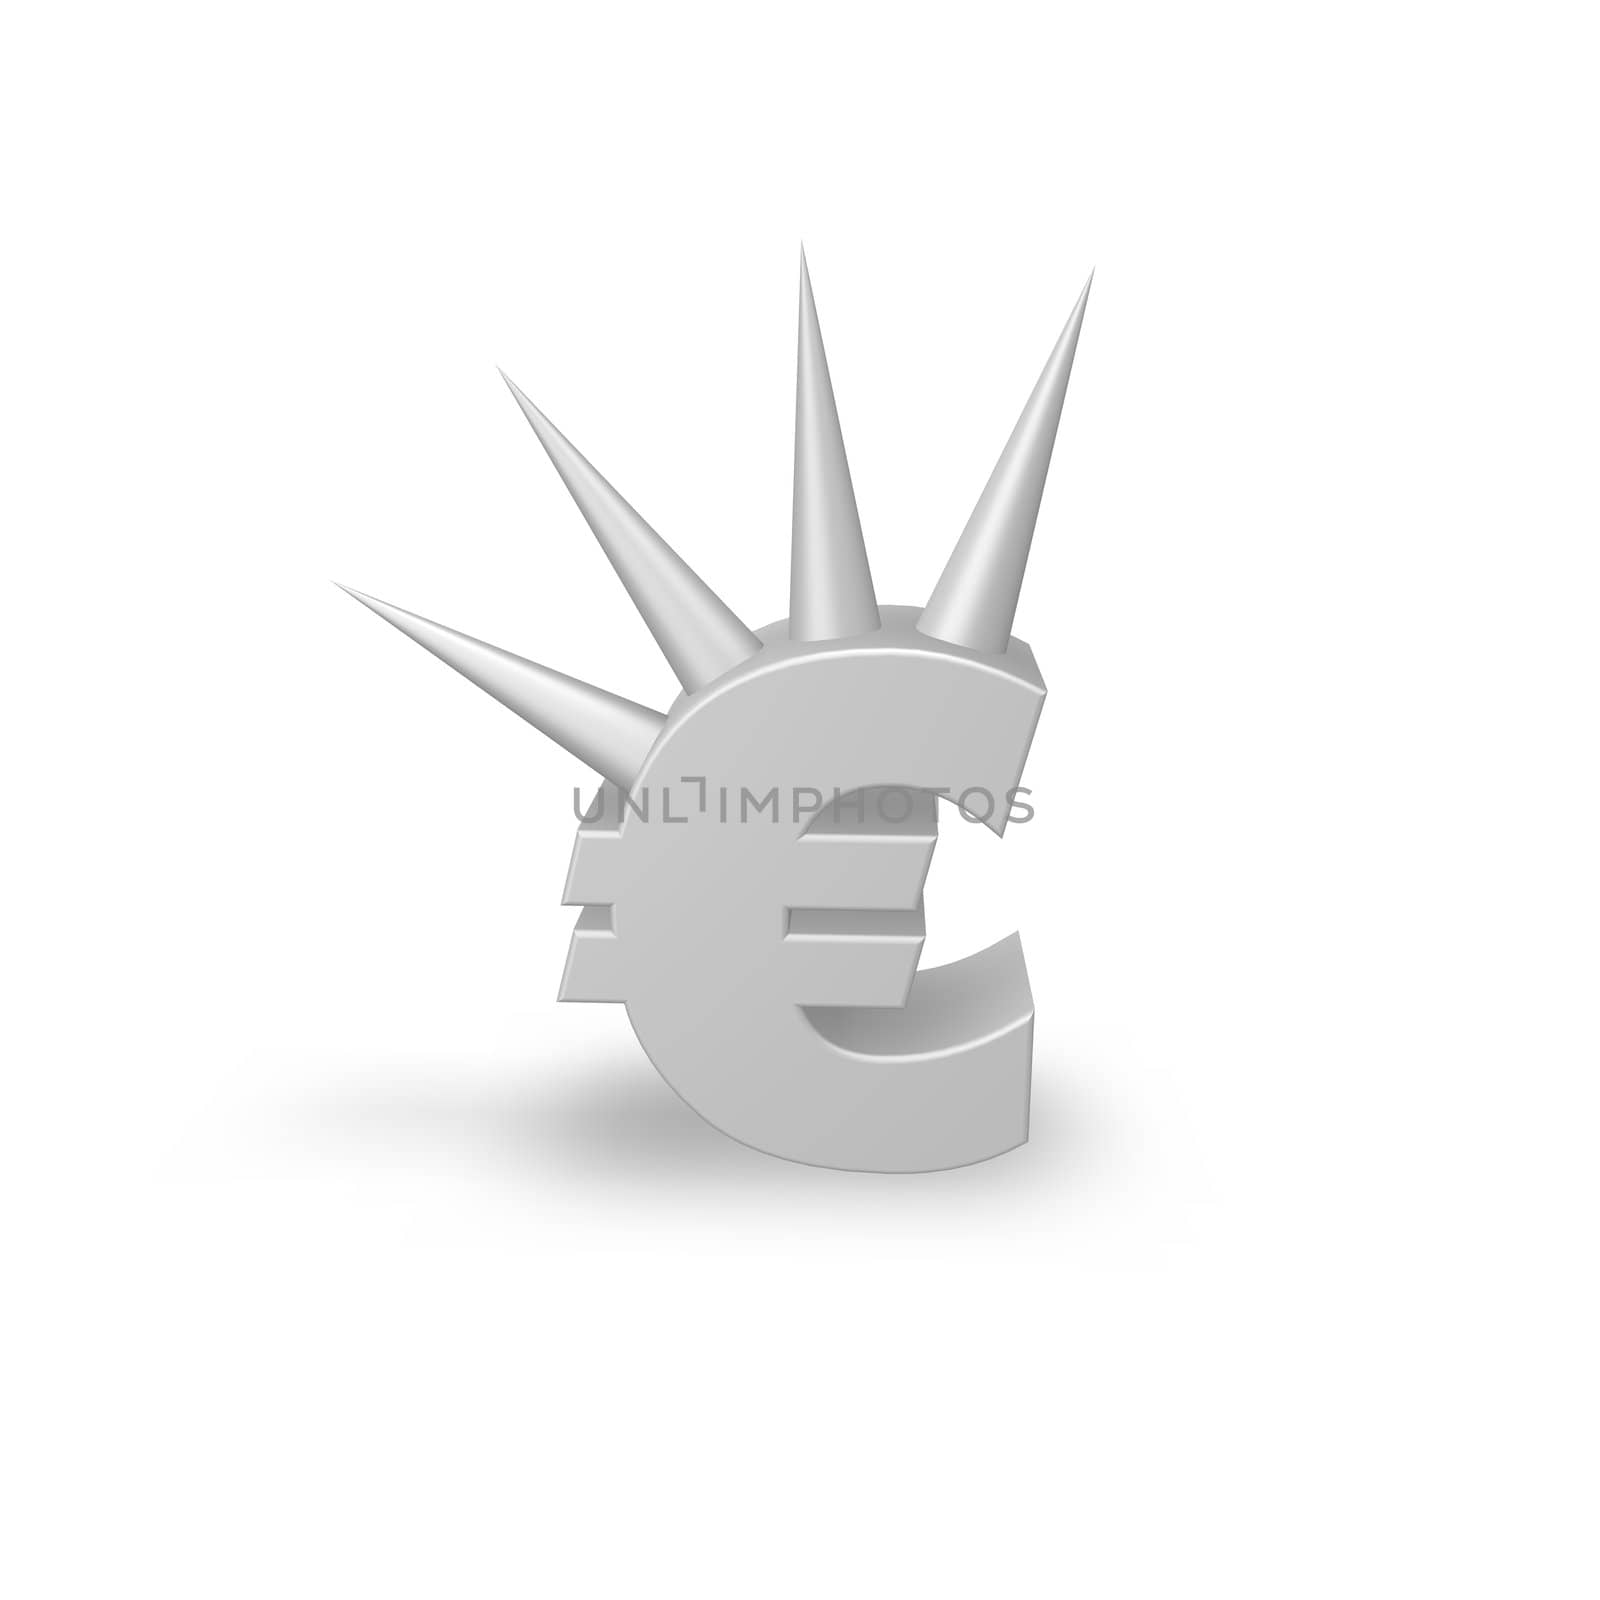 euro symbol with prickles - 3d illustration